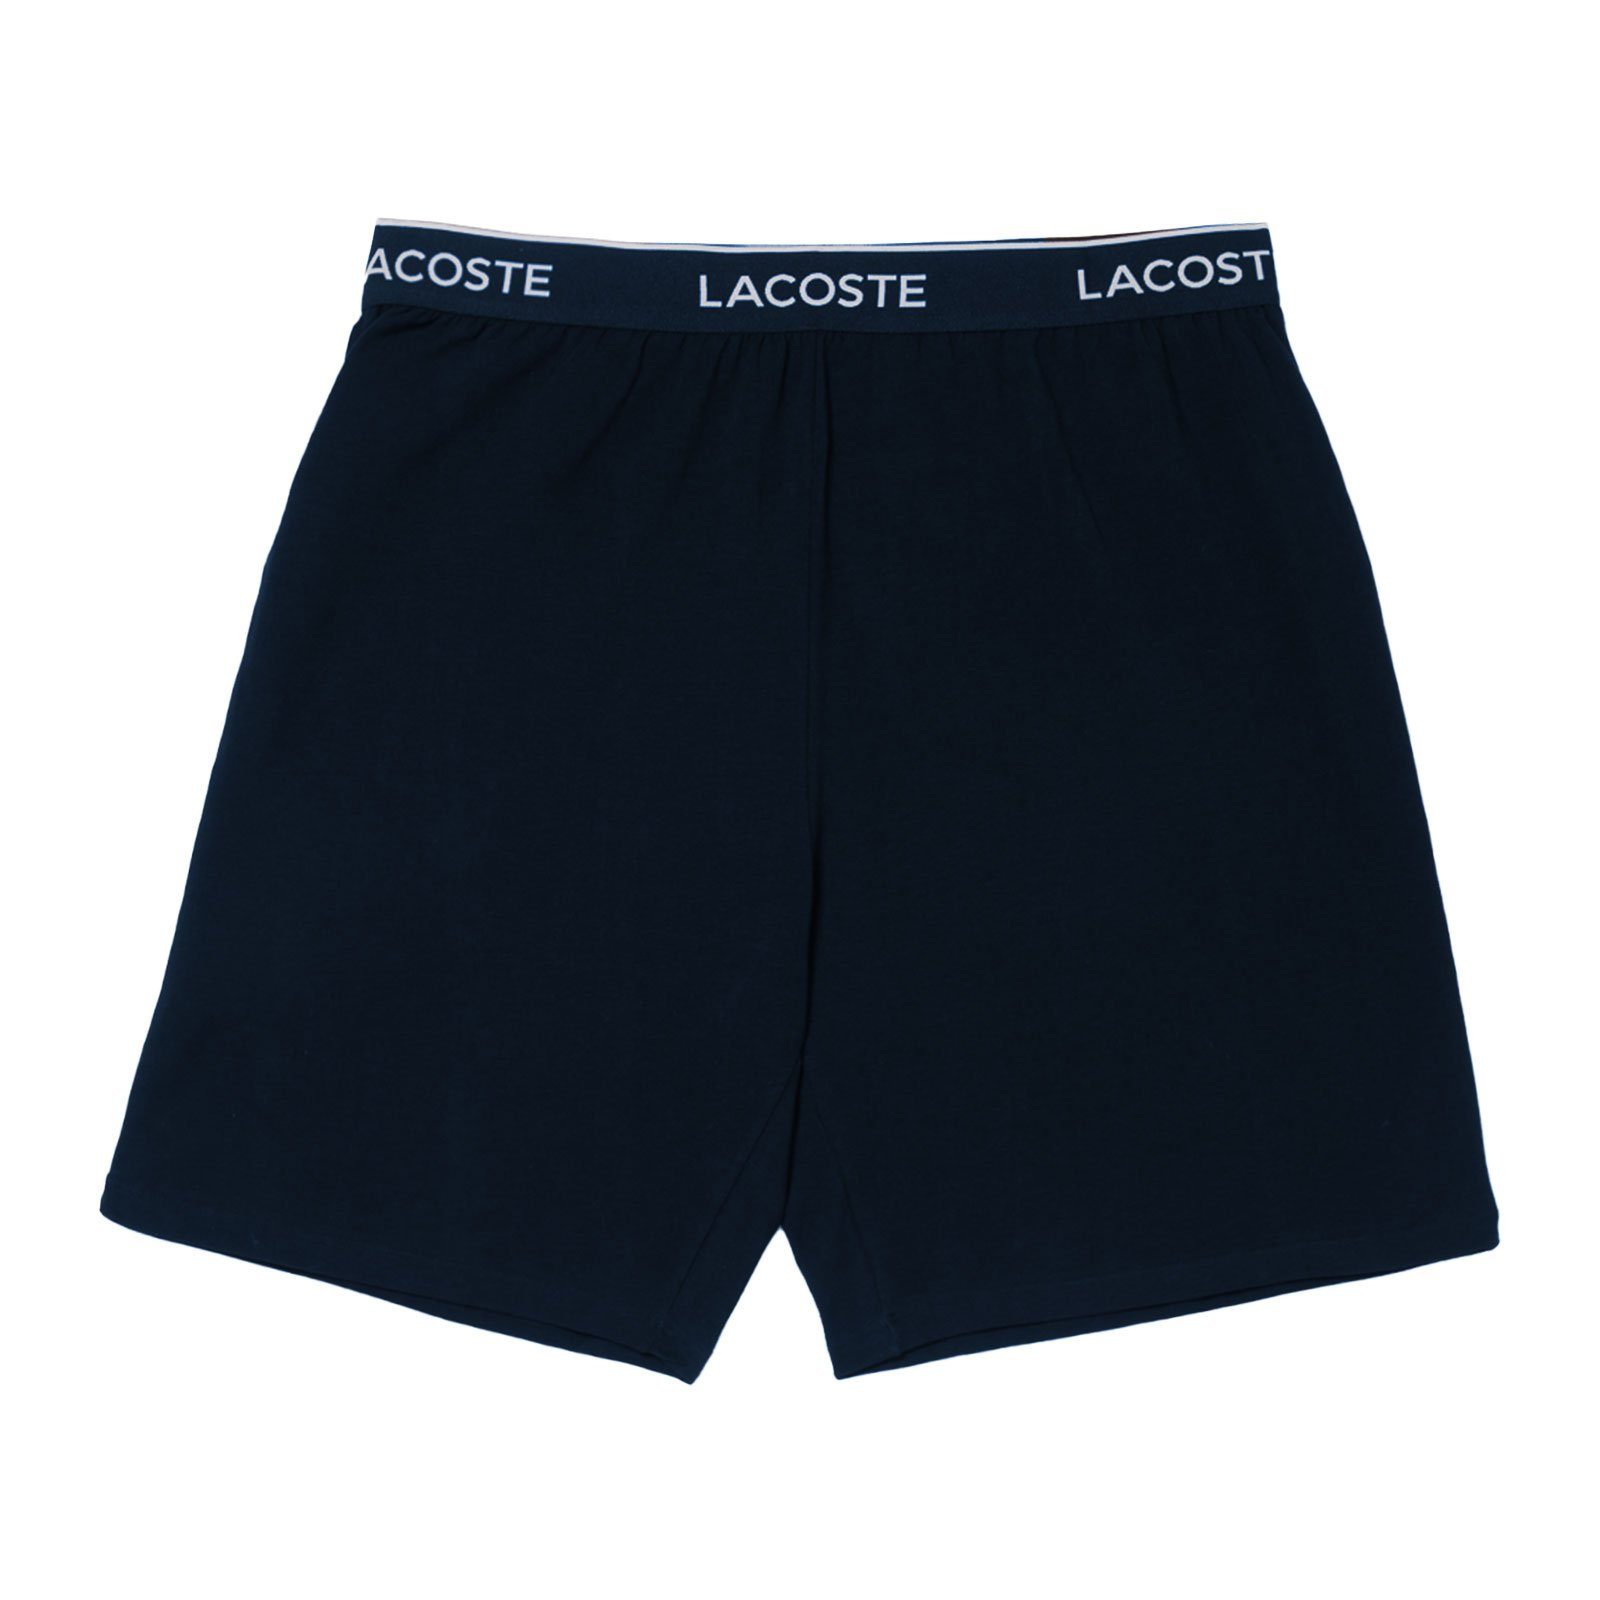 Lacoste Pyjamashorts Loungewear Shorts mit umlaufenden Markenschriftzug 166 bleu marine | Shorts